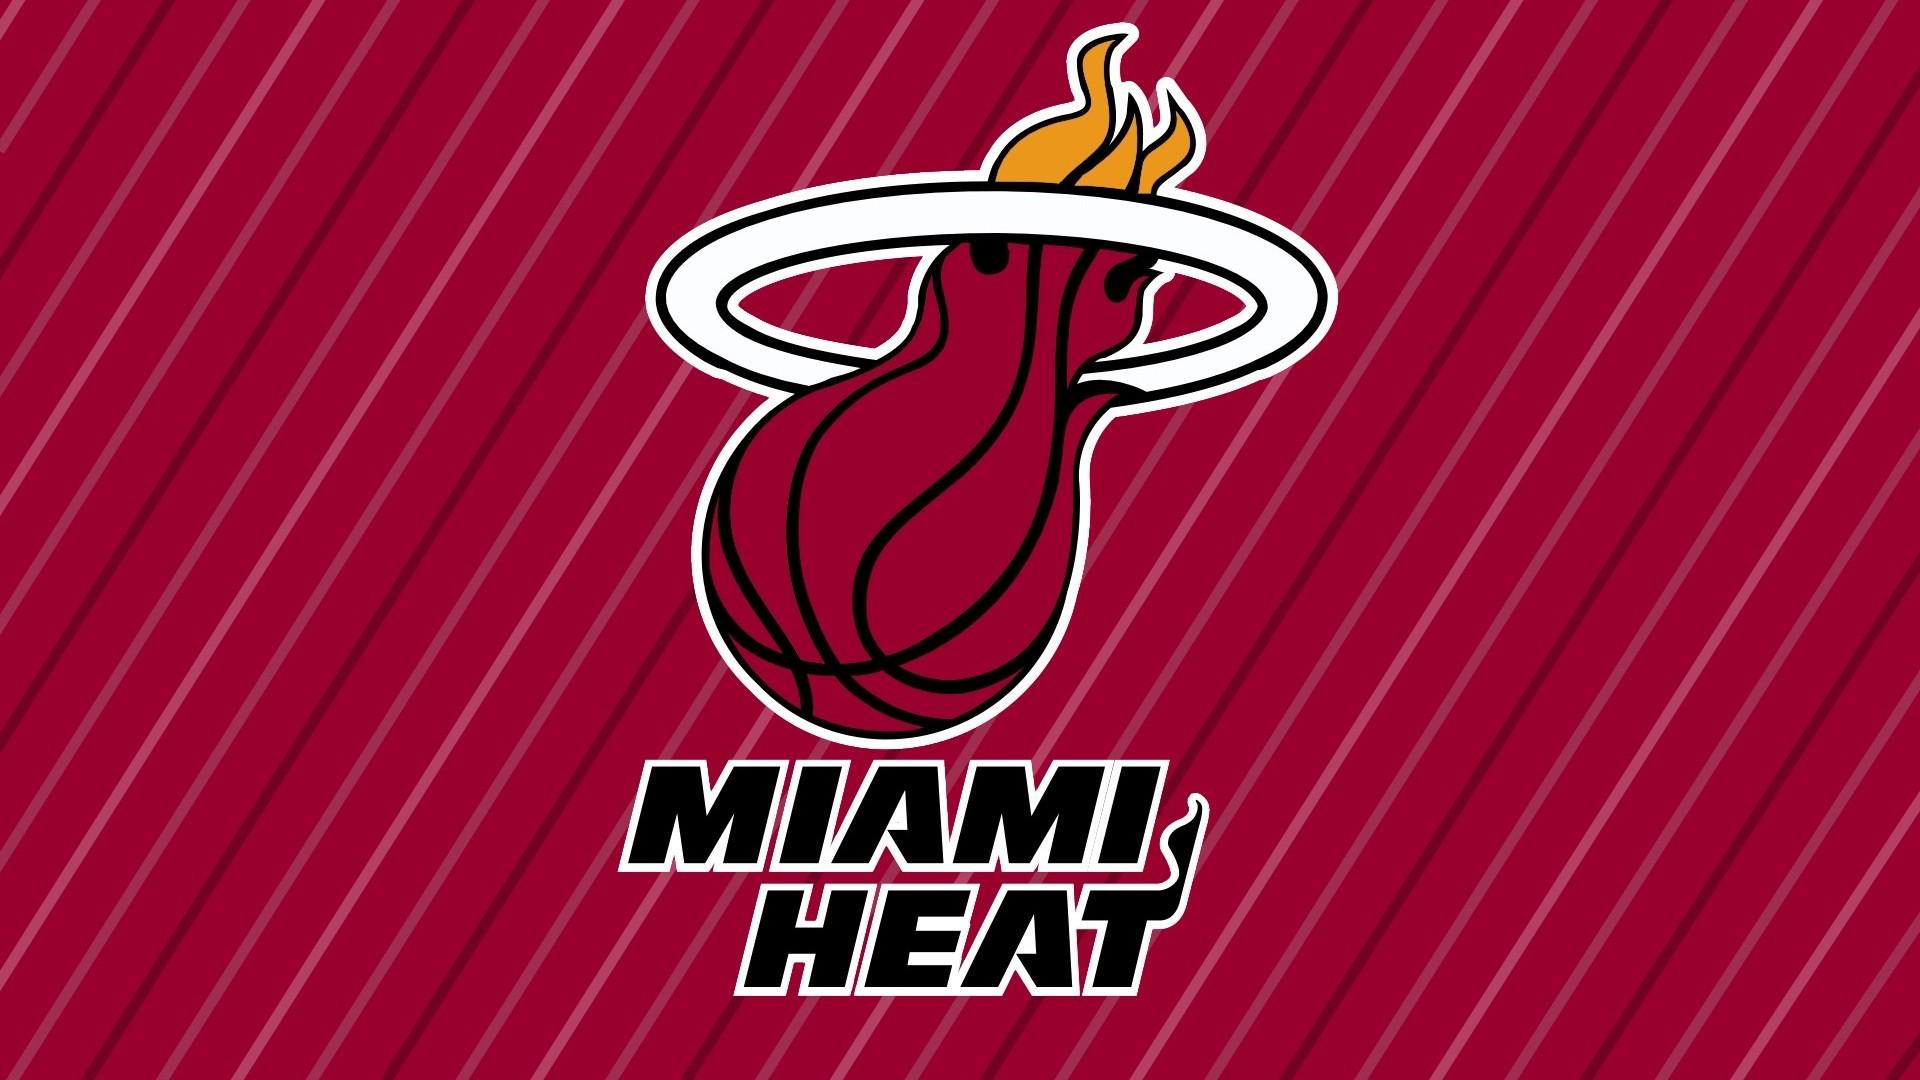 Free download Wallpaper HD Miami Heat 2019 Basketball Wallpaper